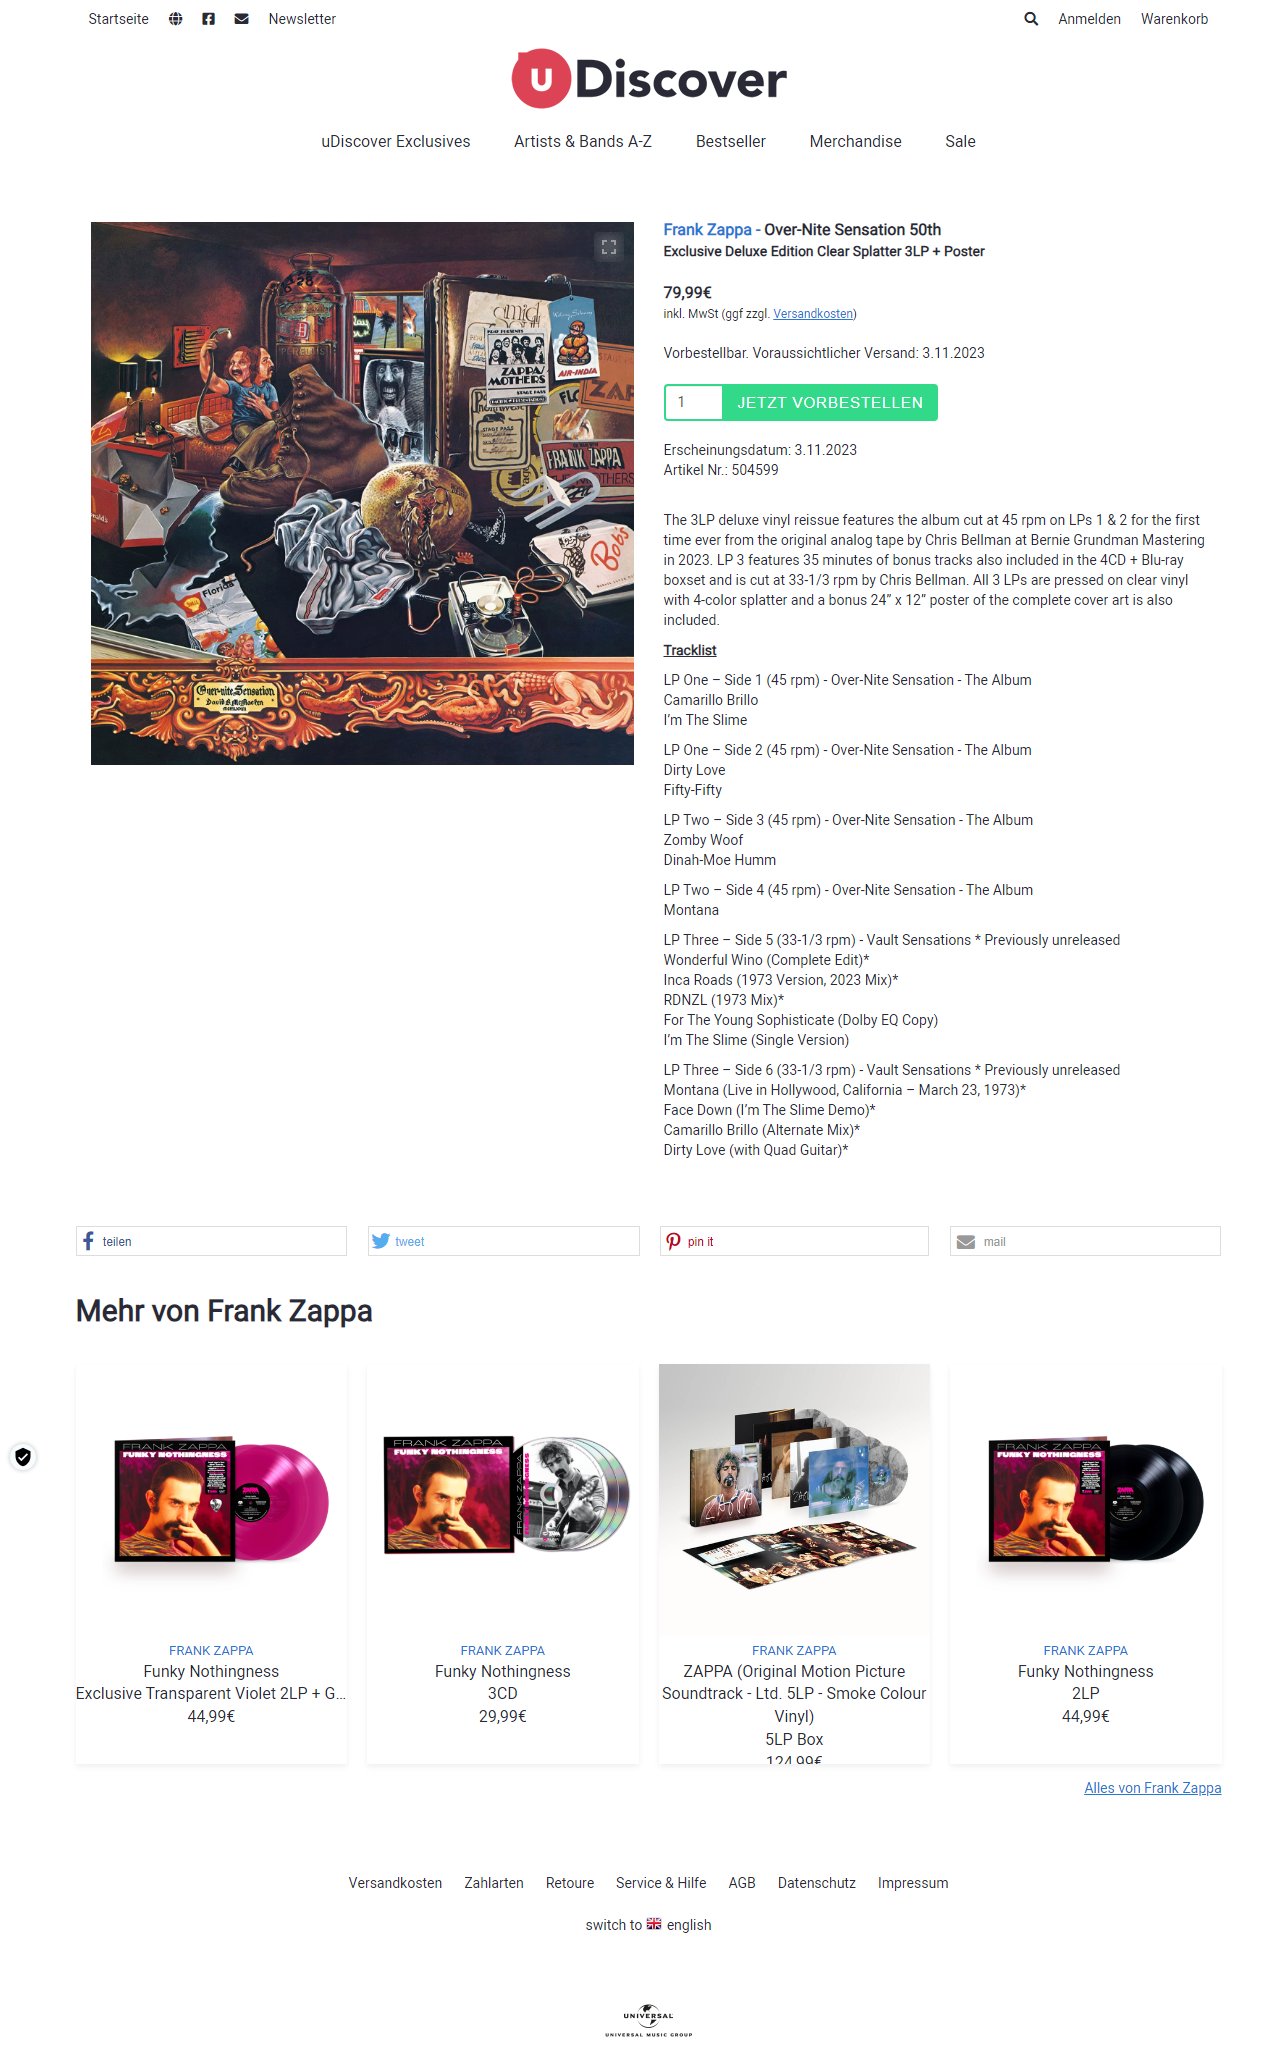 Frank-Zappa-Over-Nite-Sensation-50th-Vinyl-504599-399877-20230826_1280.jpg